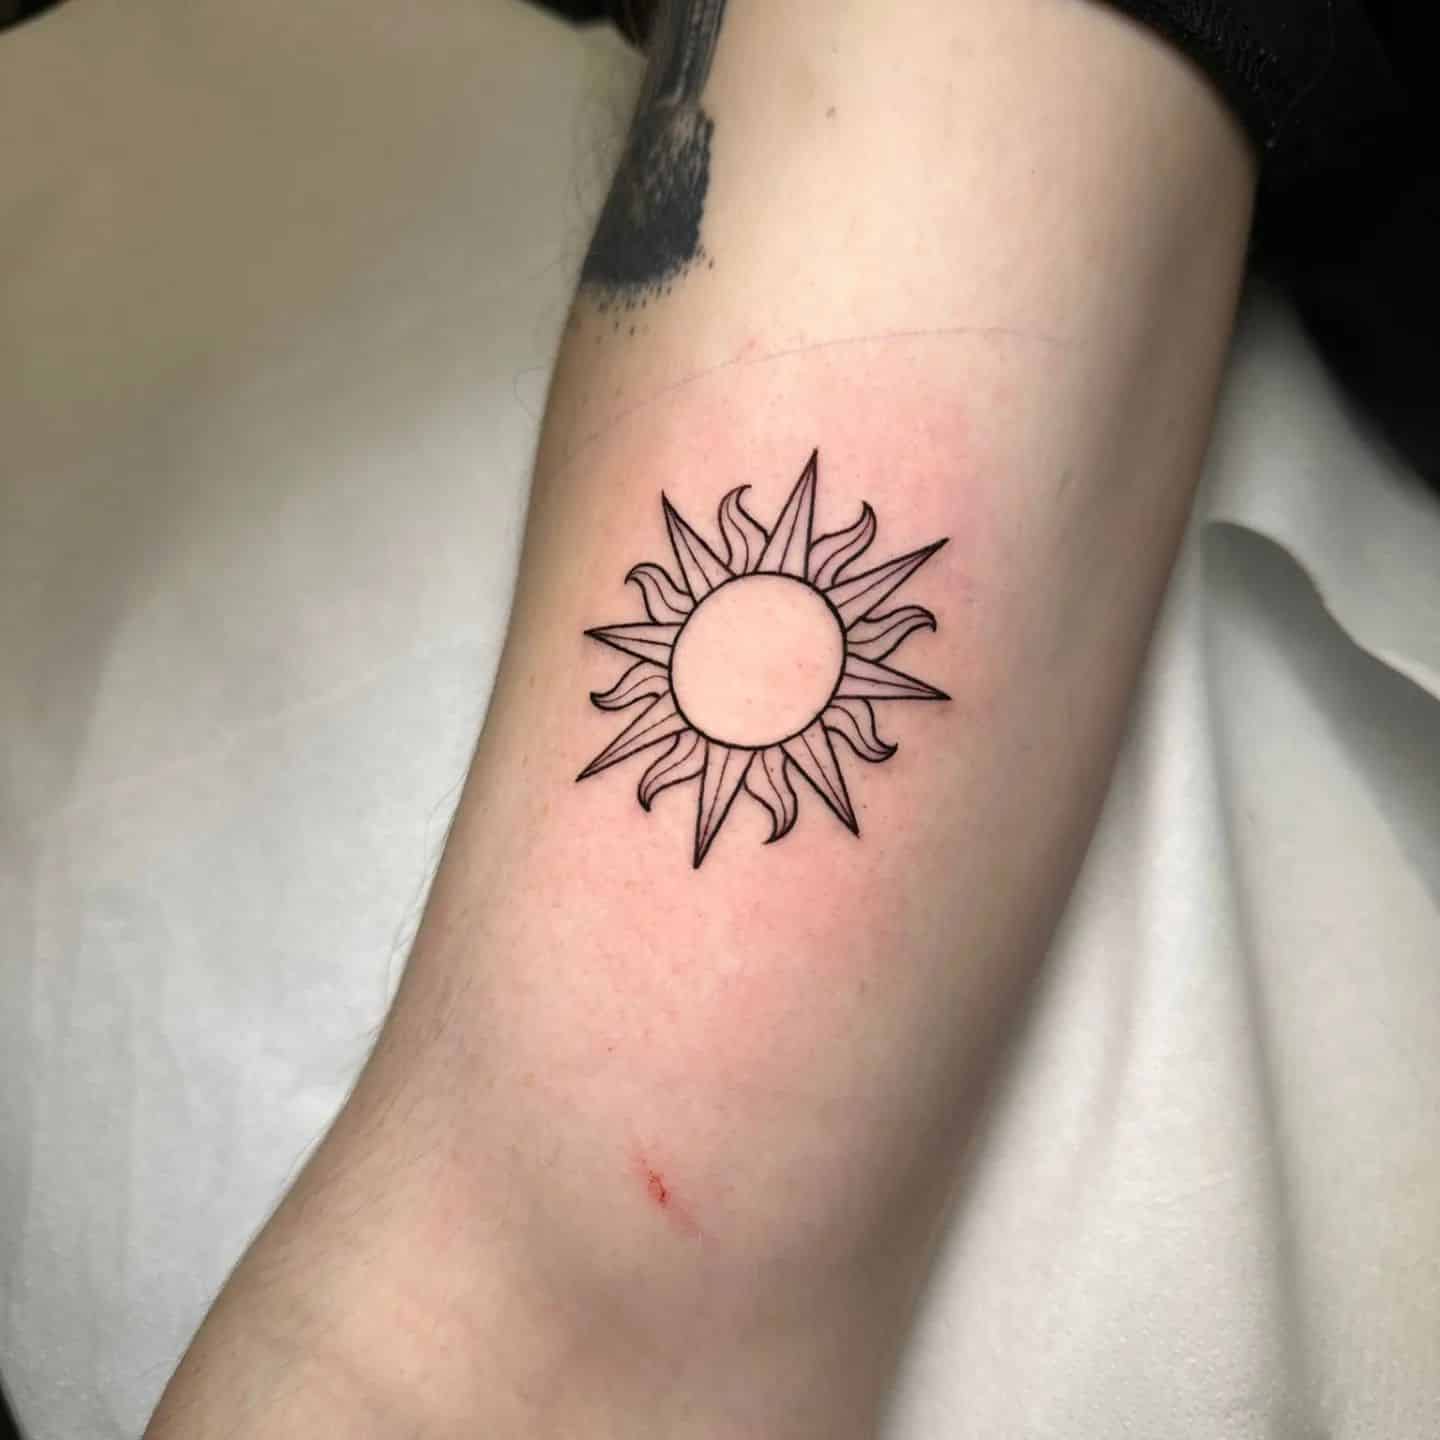 10 Best Sun Tattoos: Best Ideas for Sun Tattoos – MrInkwells